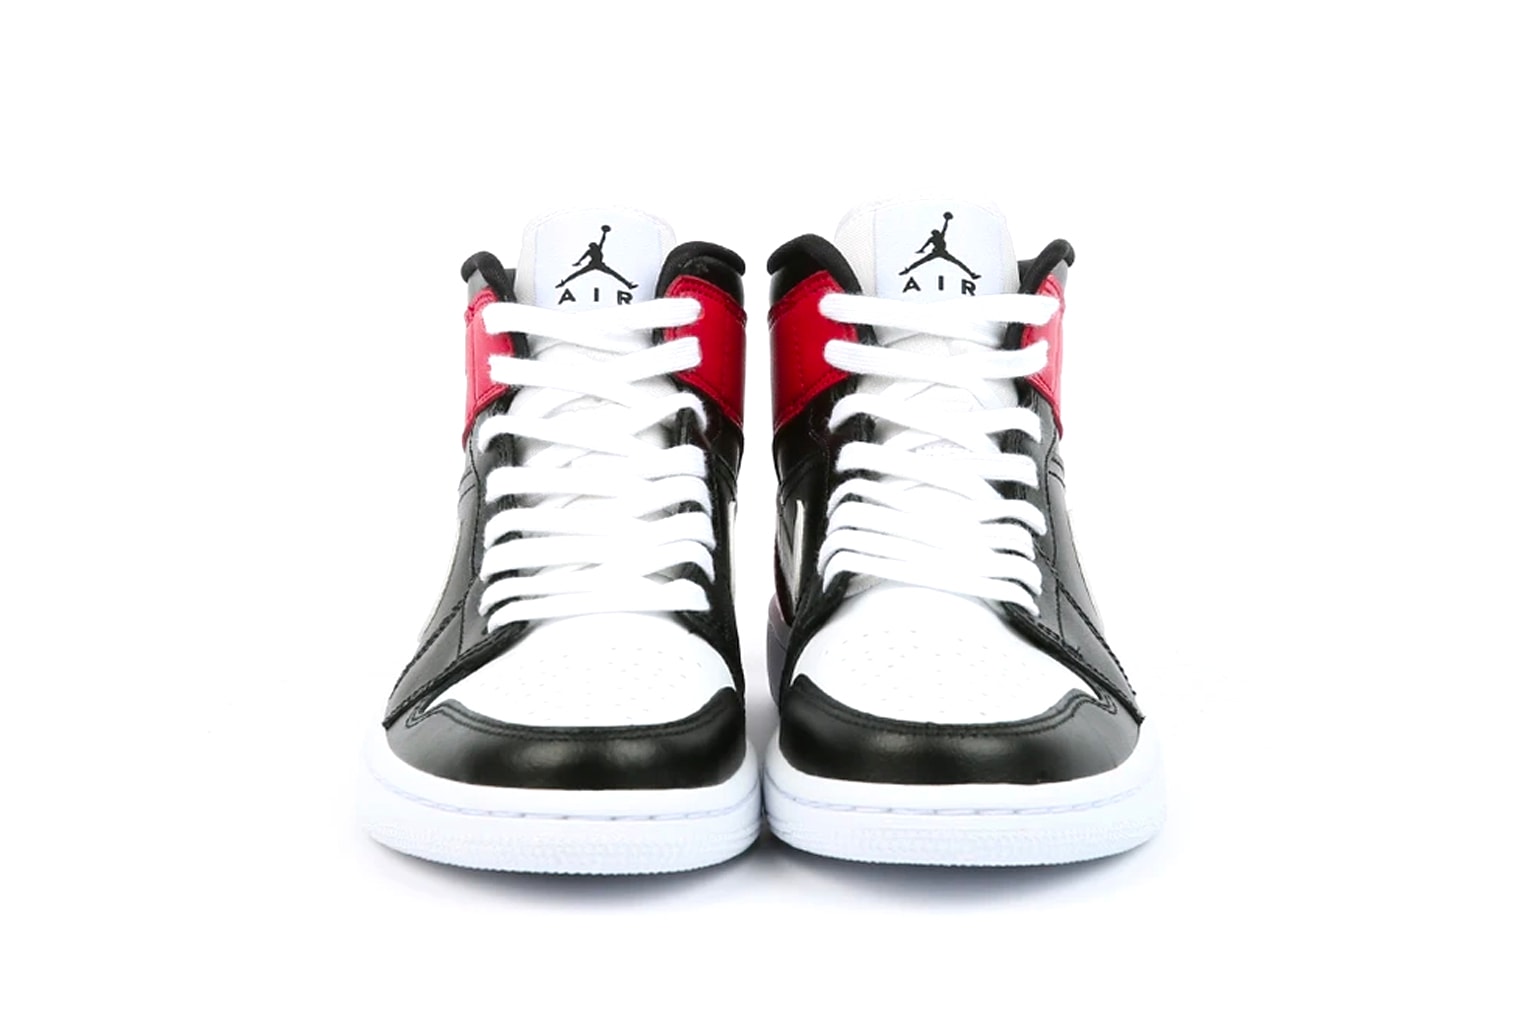 jordan brand air jordan 1 mid michael jordan noble red white black nike sneakers footwear leather classic pam pam london nike